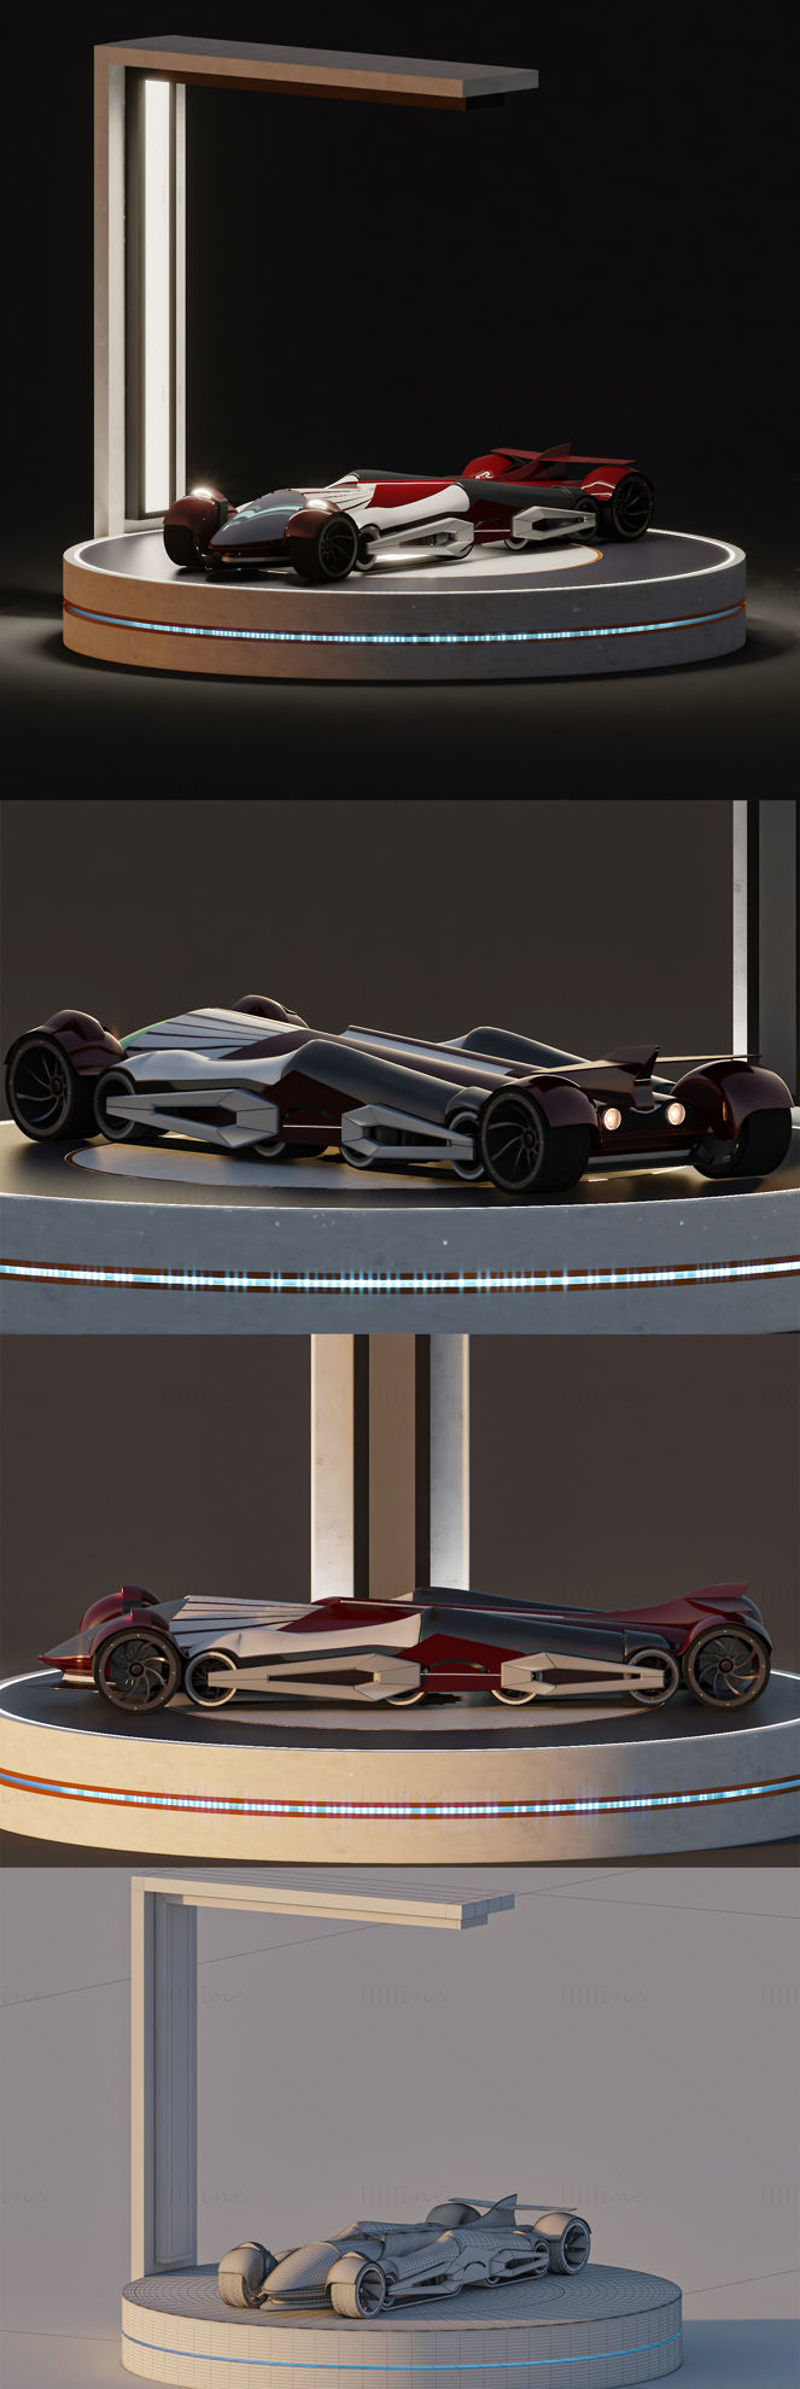 خودروی مفهومی اسپرت + غرفه مدل سه بعدی صحنه